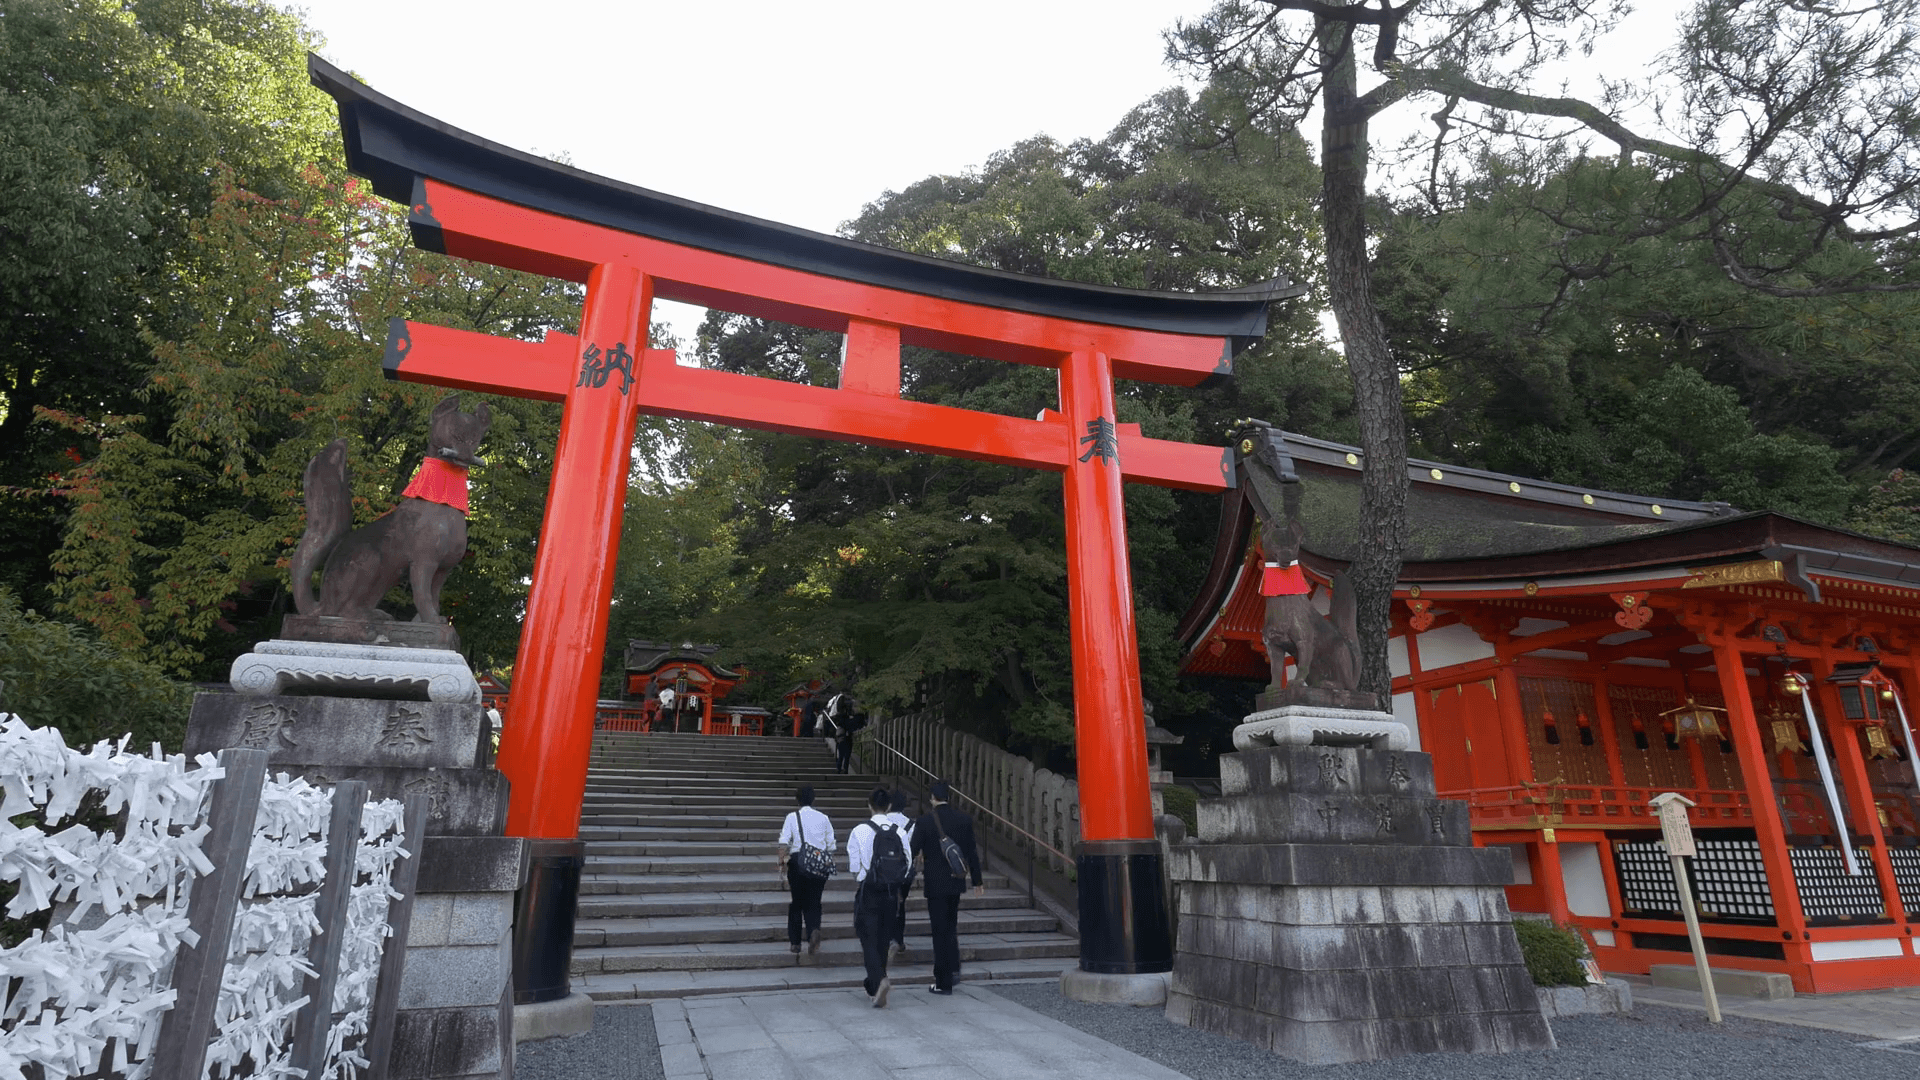 High school students pass a torii gate at Fushimi Inari Taisha, a